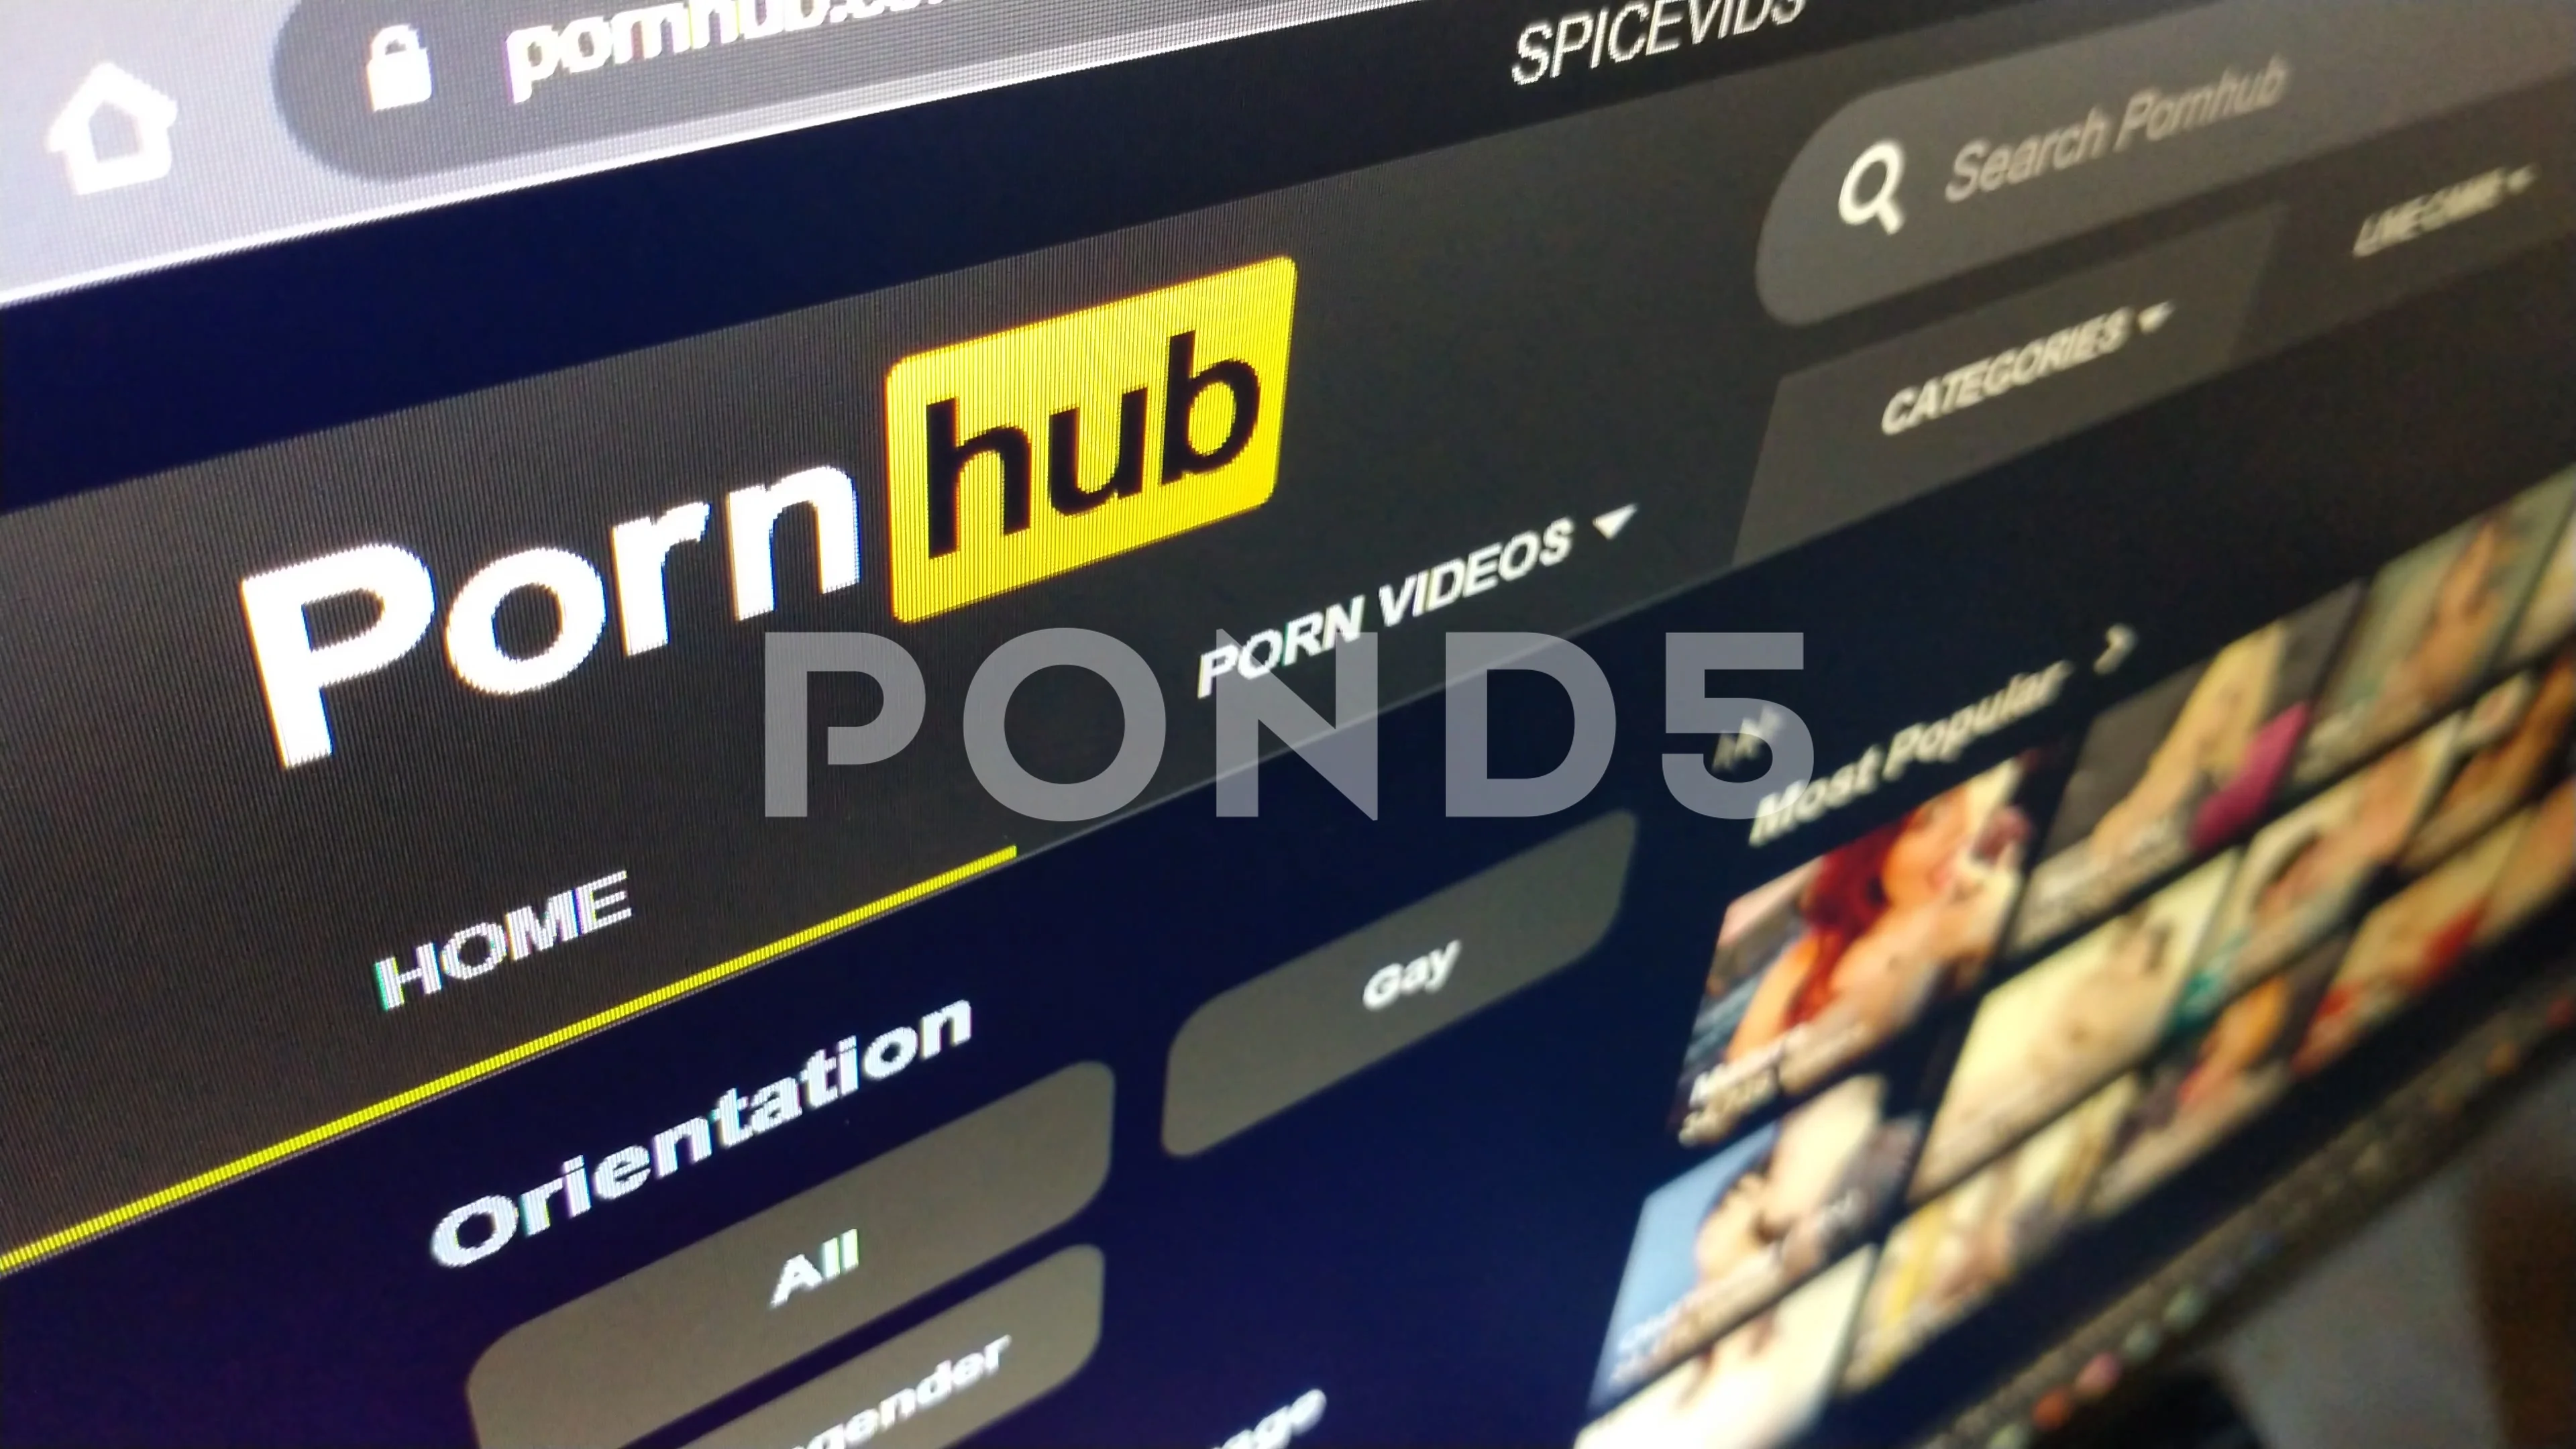 porn hub erotic video platform. pornhub ... | Stock Video | Pond5